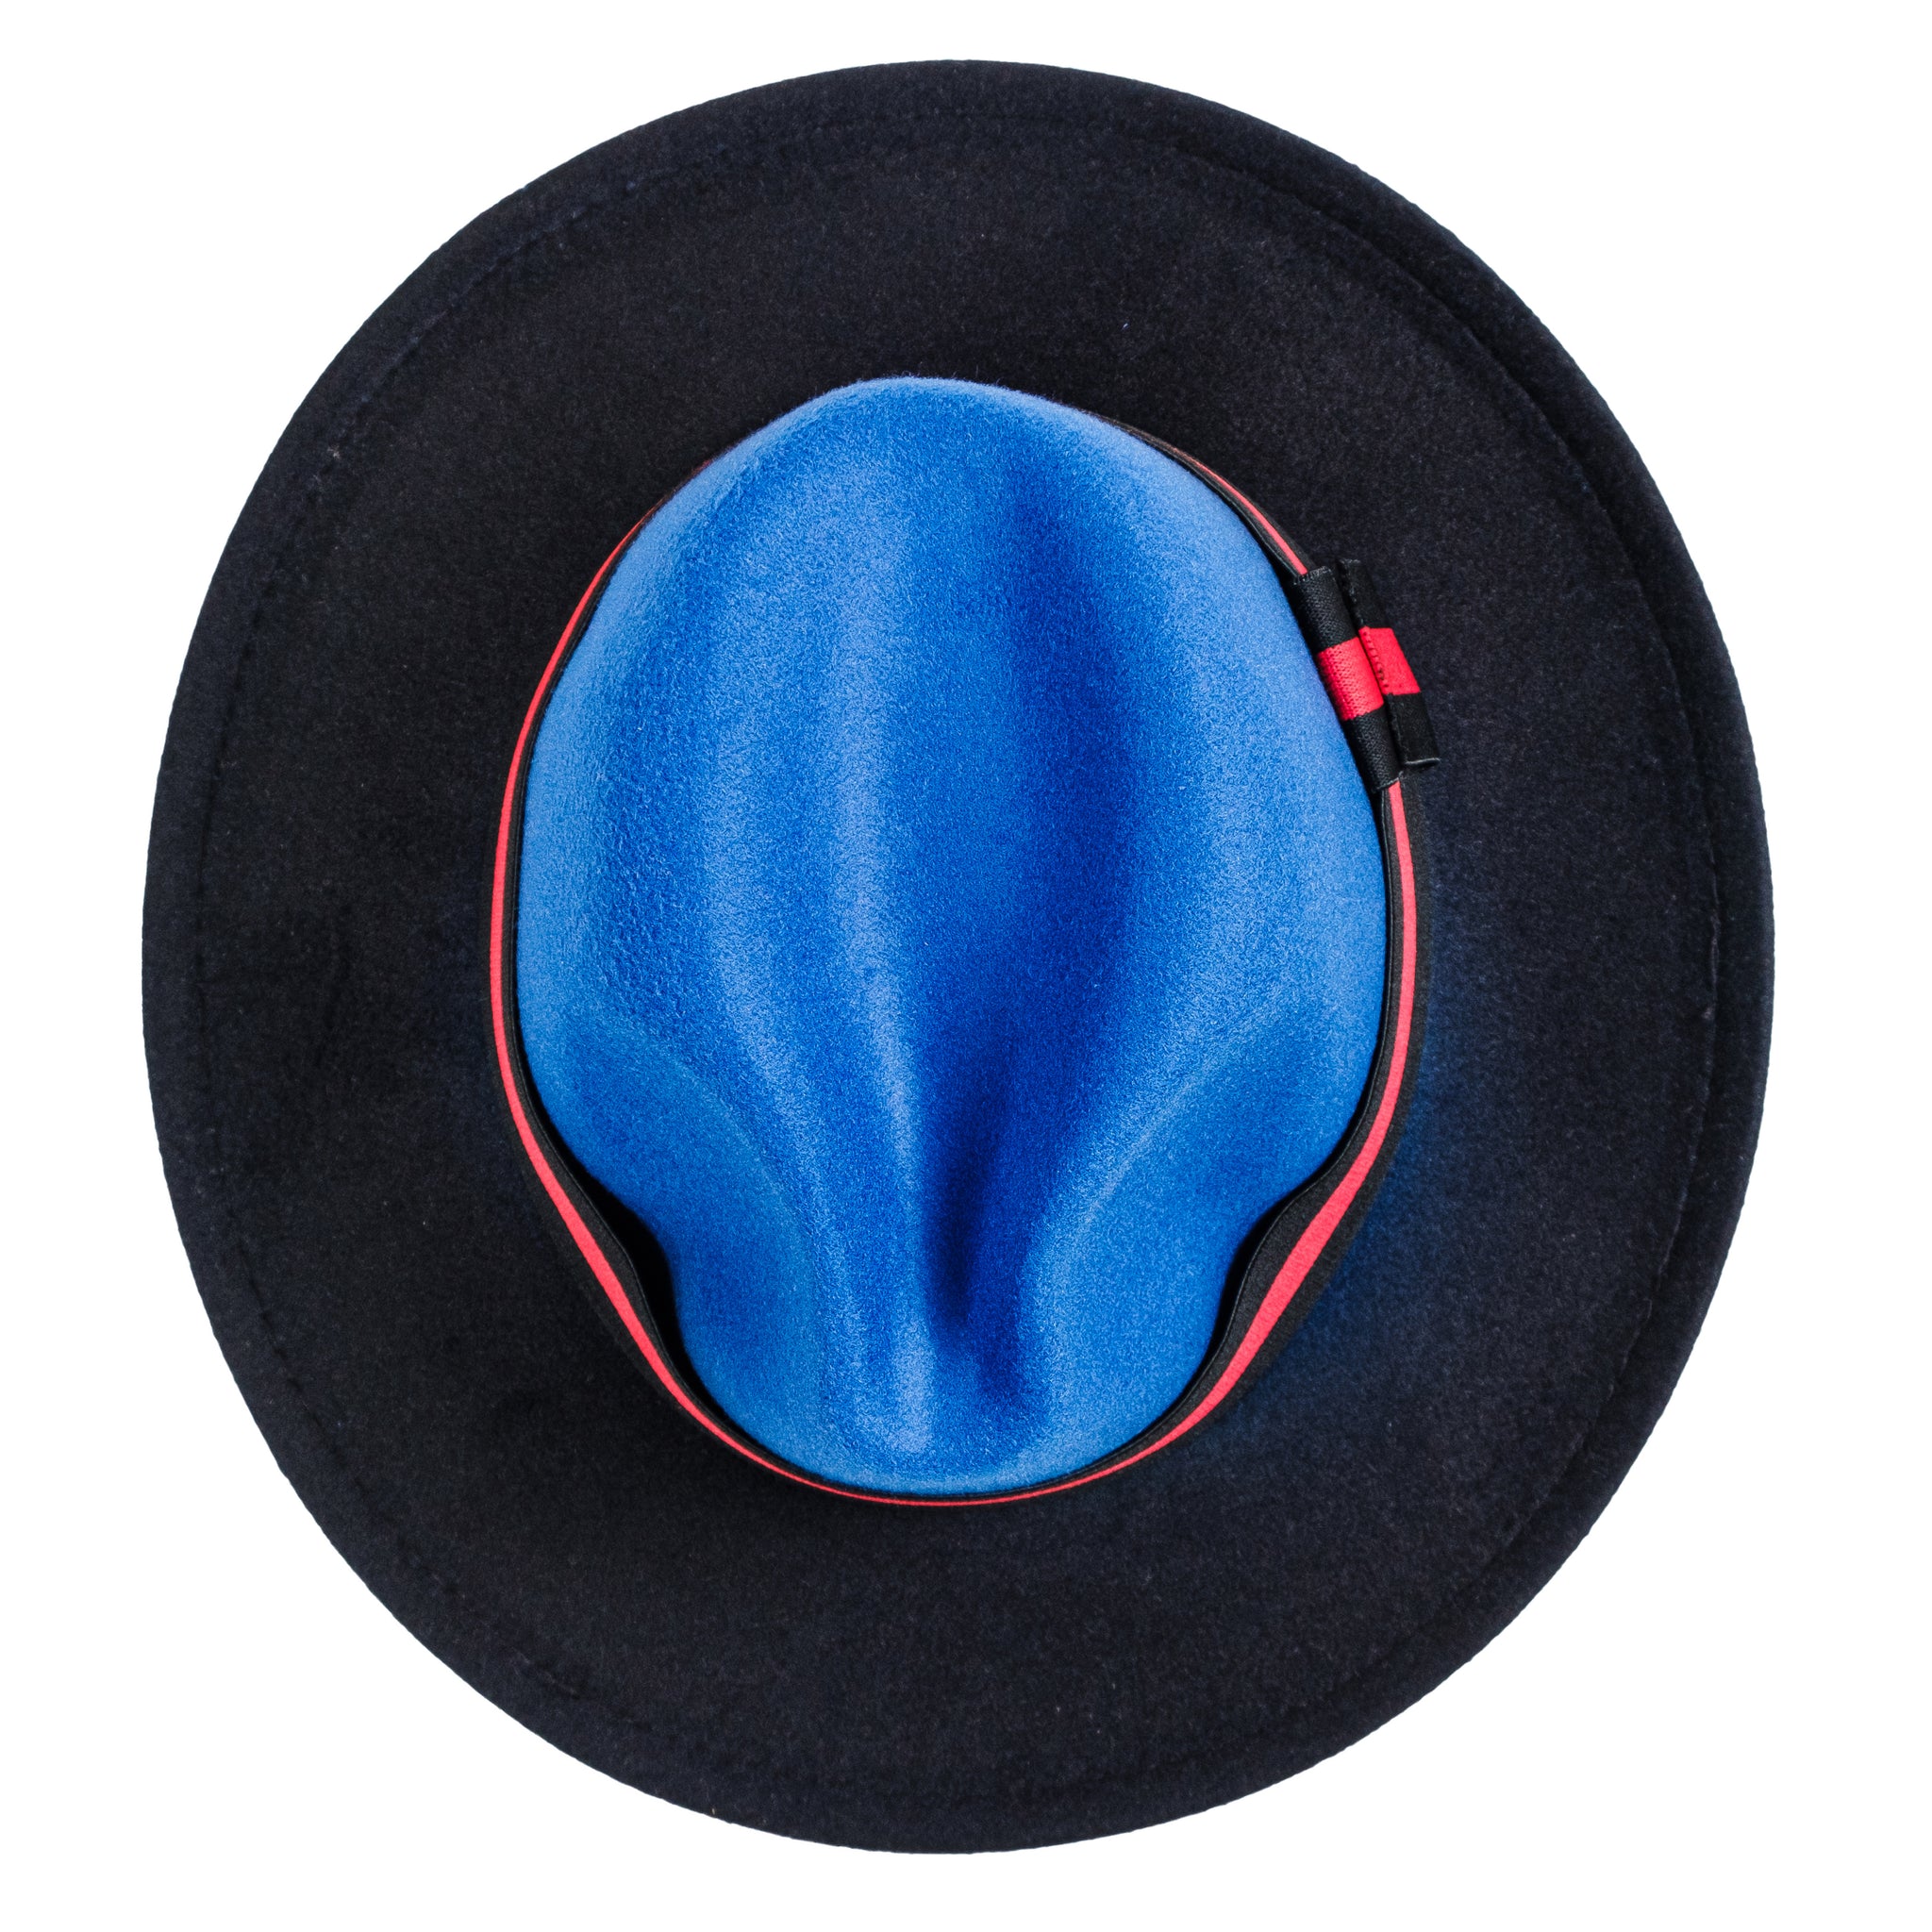 Chokore Double-tone Ombre Fedora Hat (Blue & Black)